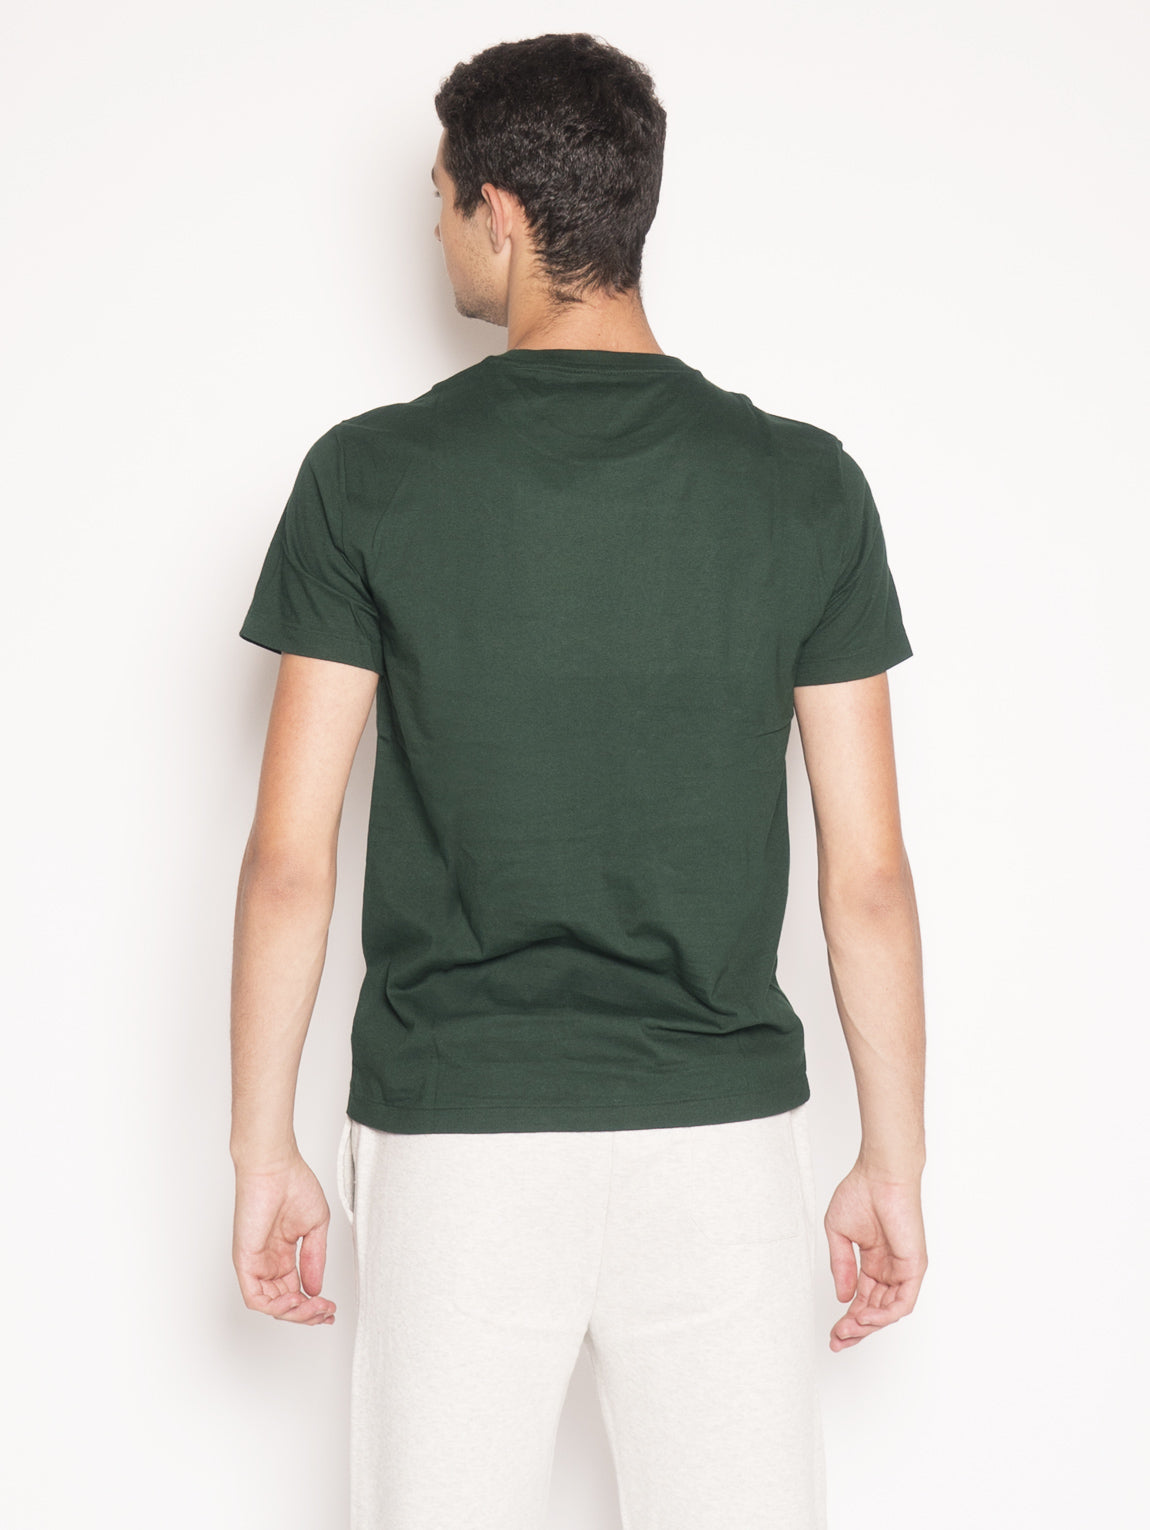 Grünes T-Shirt aus Baumwolle